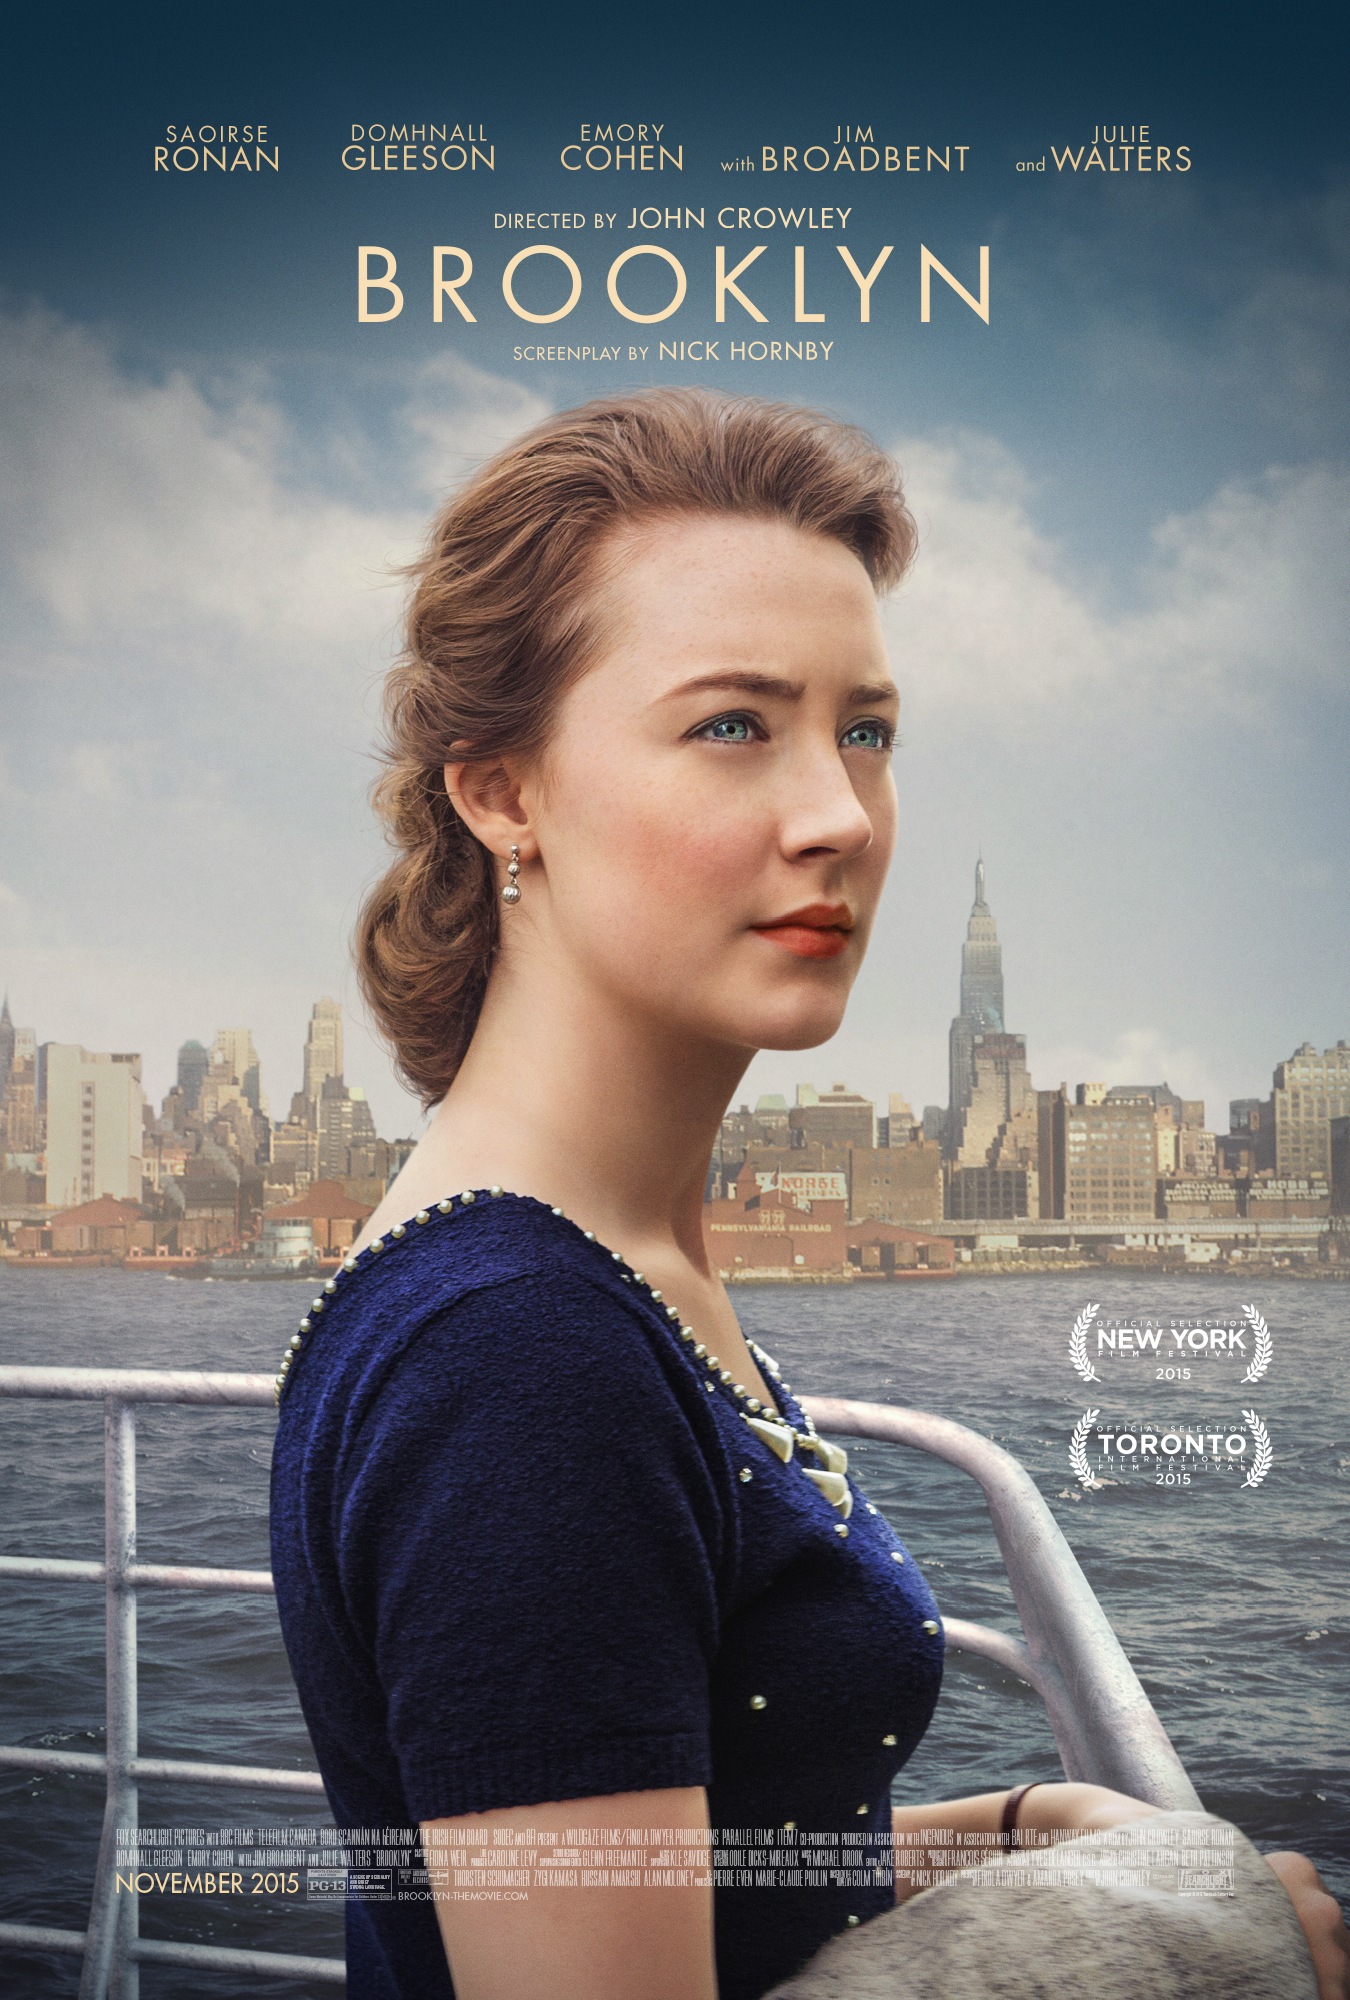 Actress Saoirse Ronan talks new film, “Brooklyn”